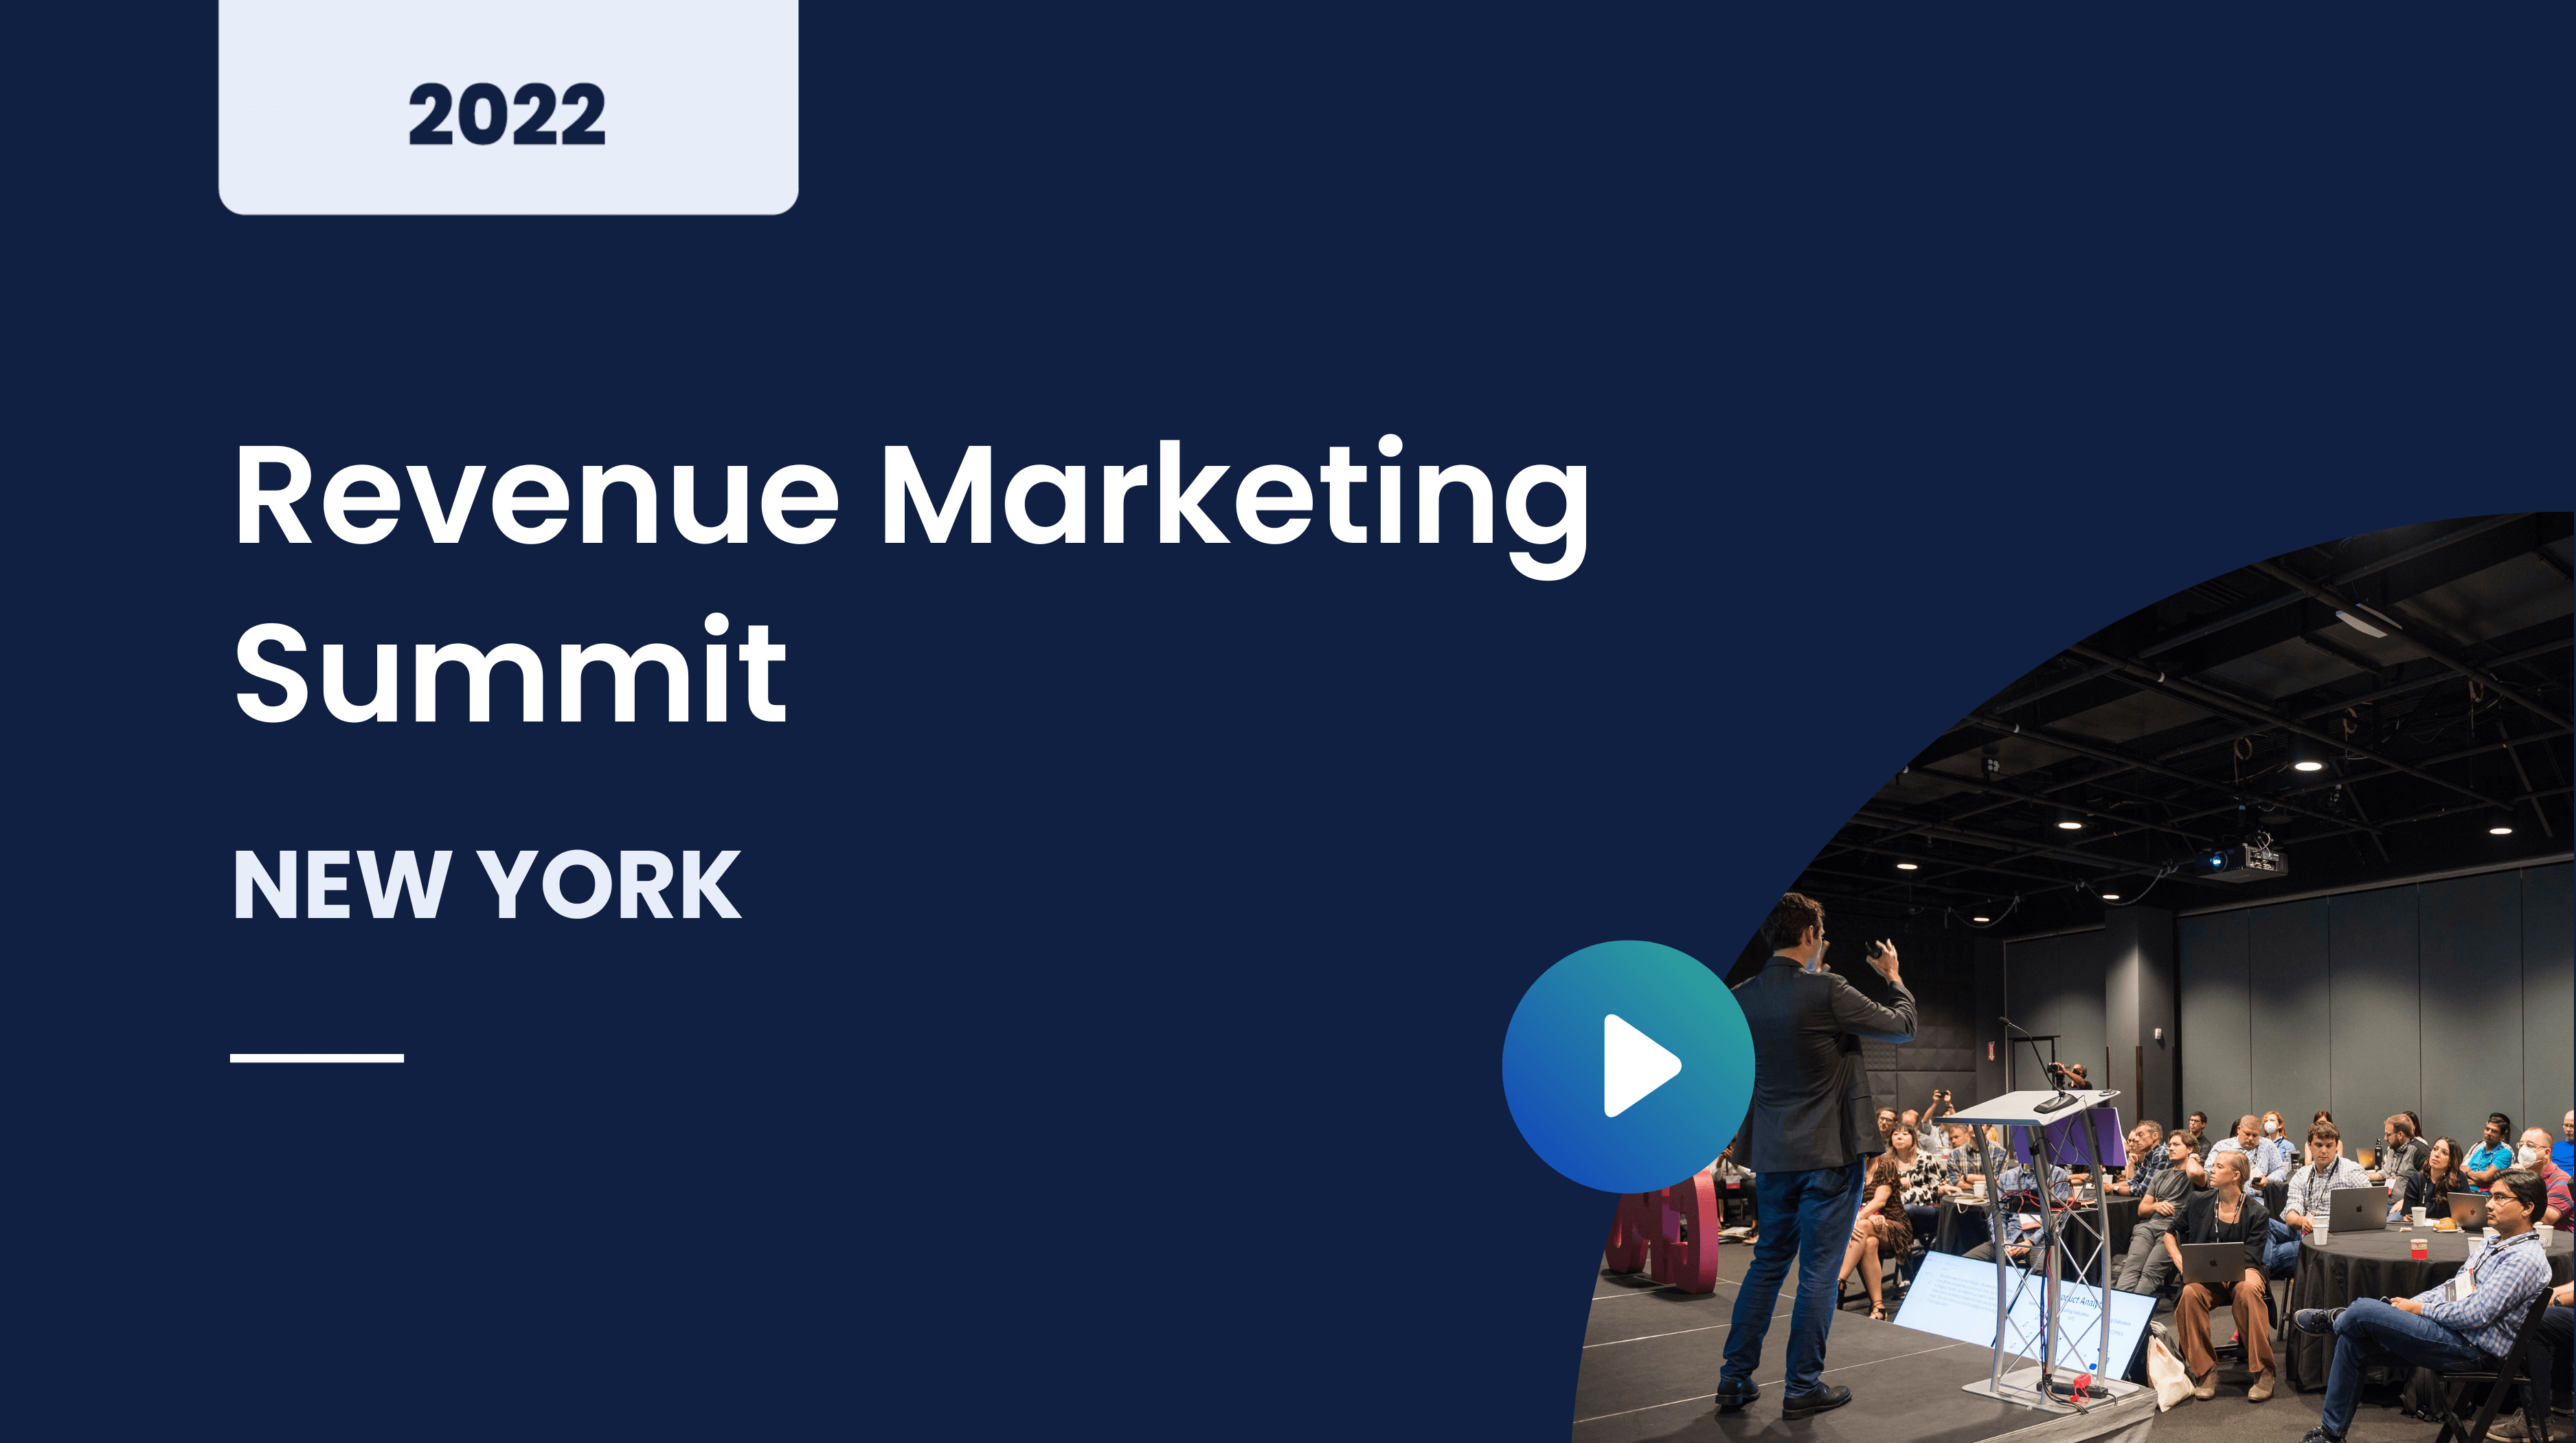 Revenue Marketing Summit New York December 2022